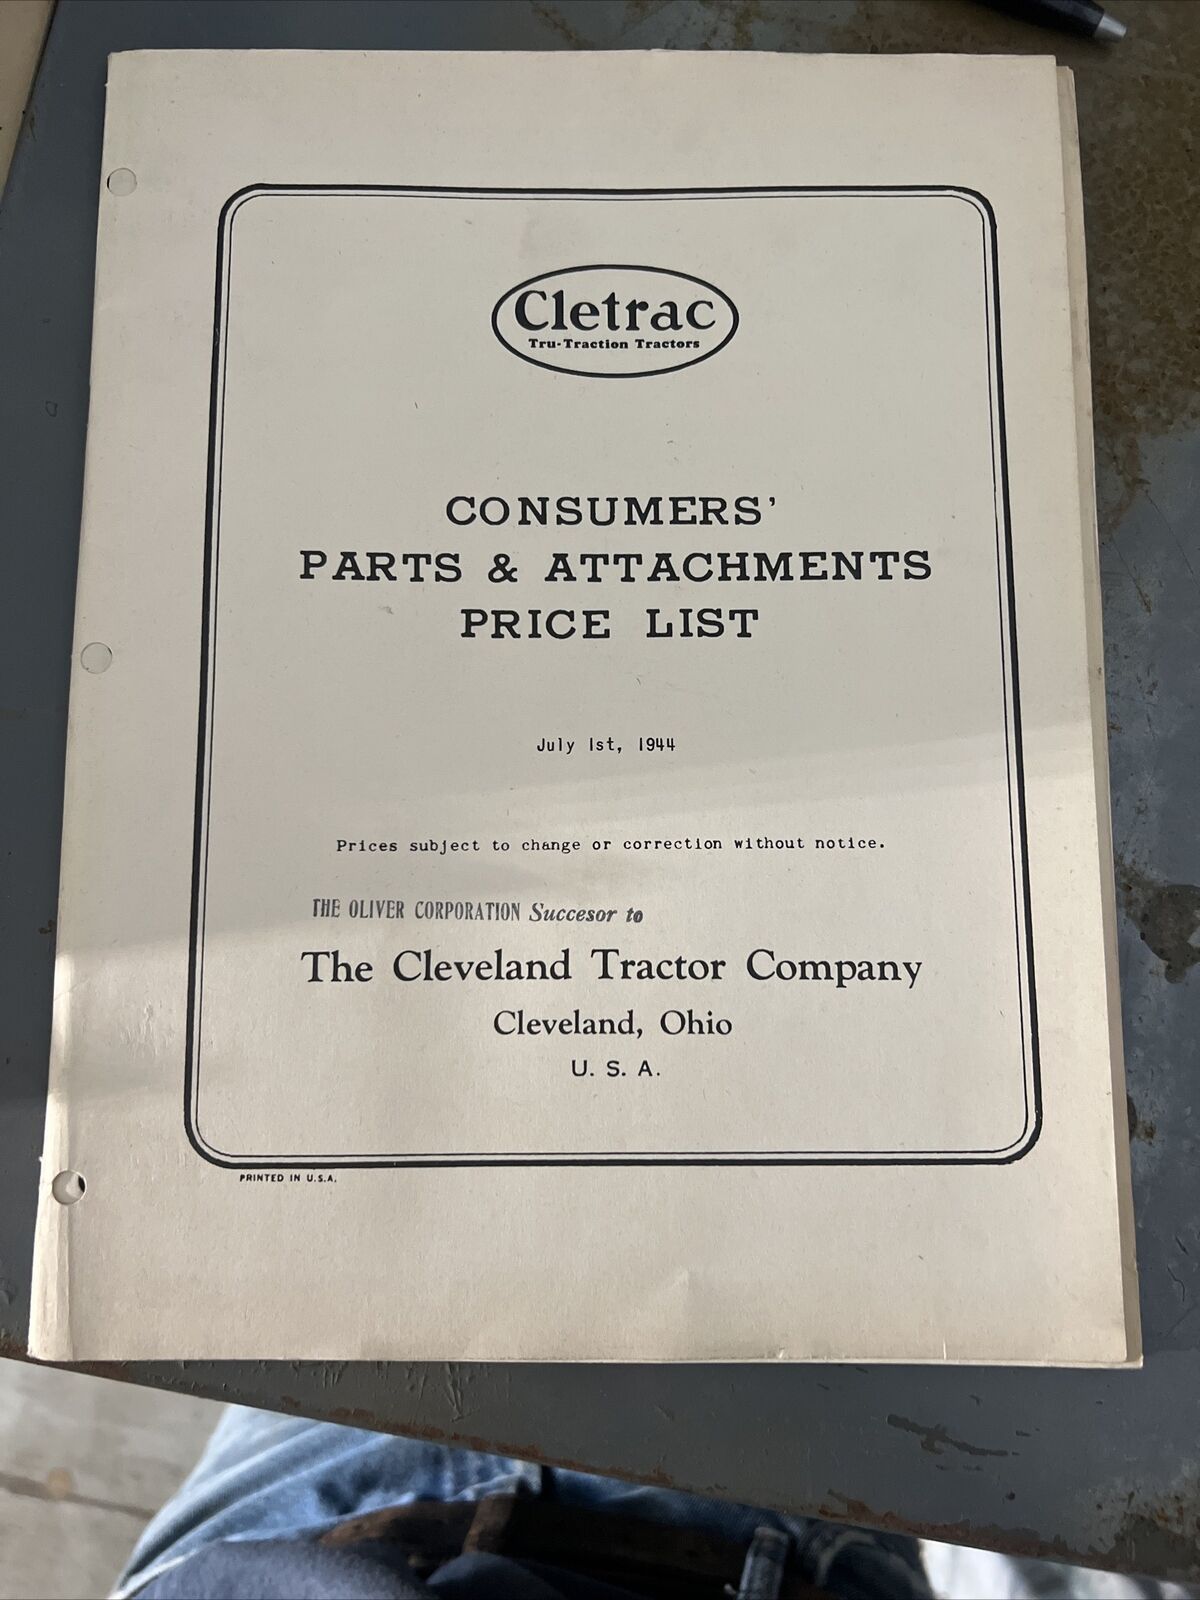 Cletrac Consumers Parts & Attachments Price List